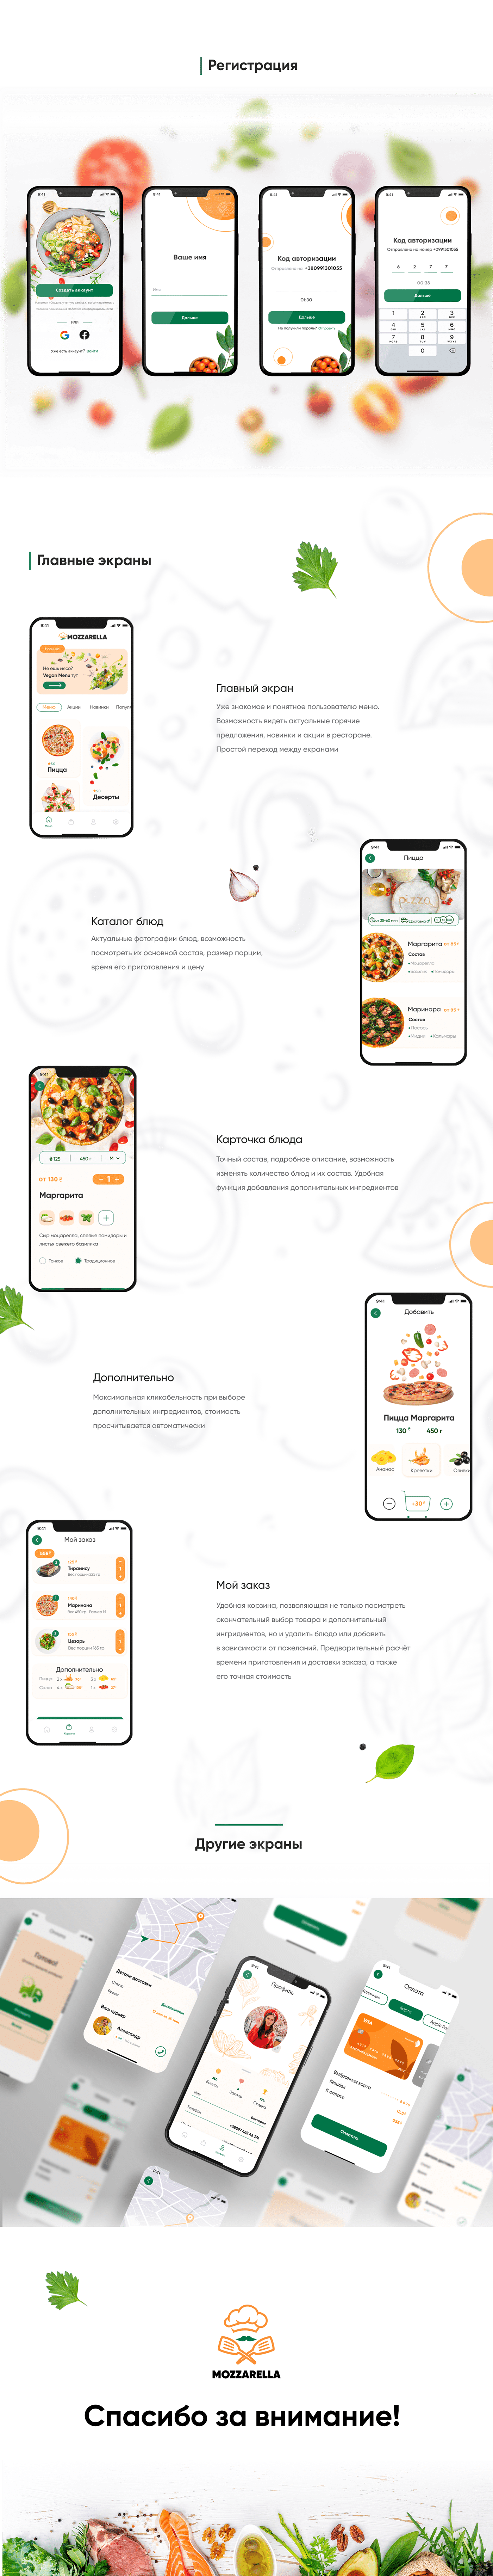 app design branding  Food  Mobile apps UI / UX user flow wireframe